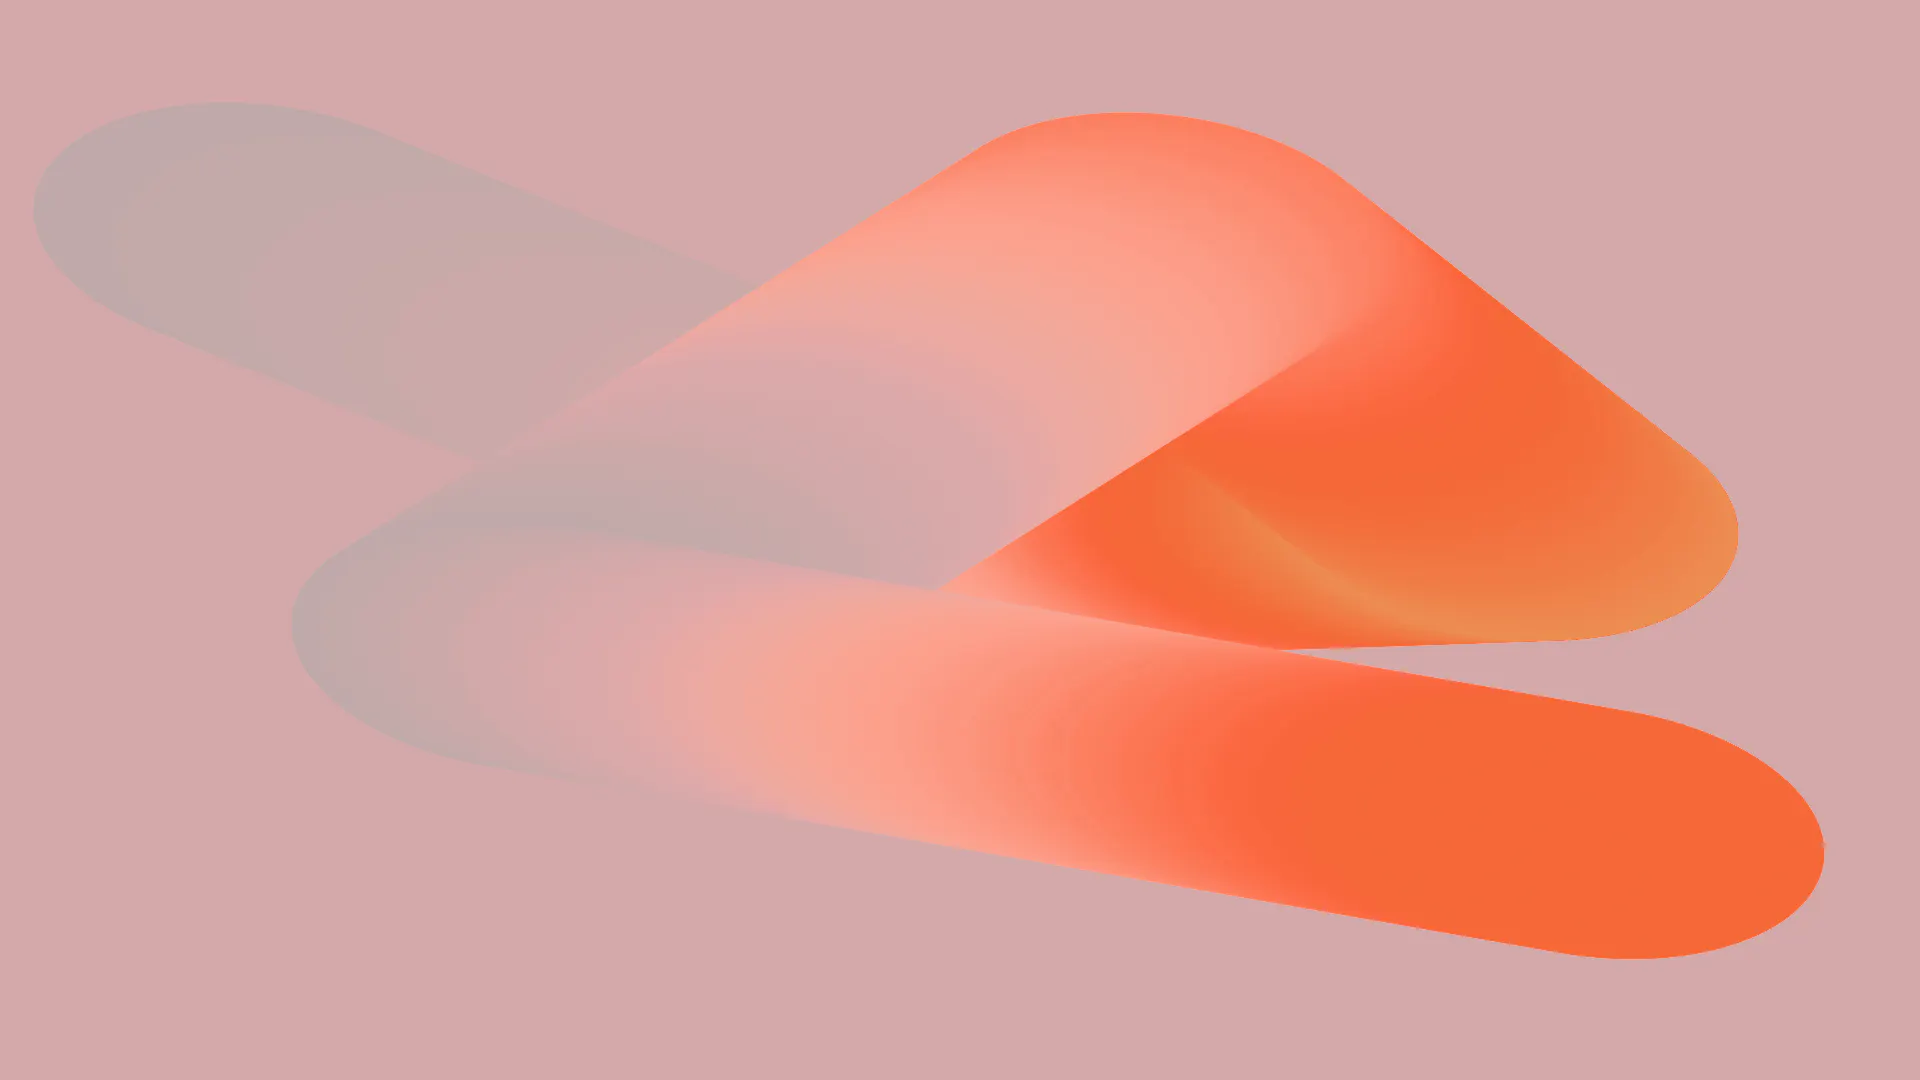 Orange curvy structure against pink background